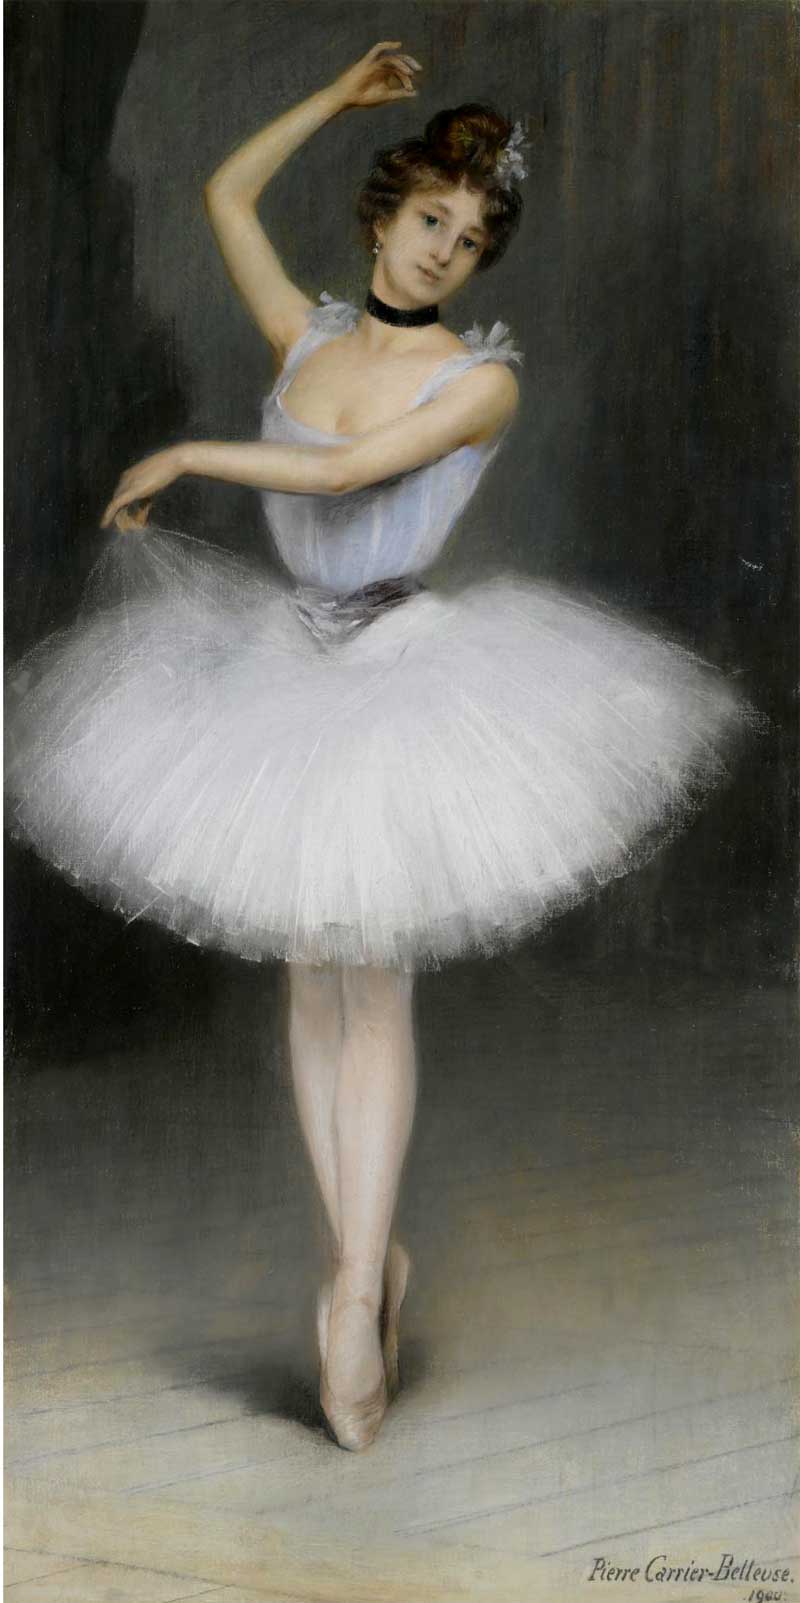 A Ballerina. Pierre Carrier-Belleuse